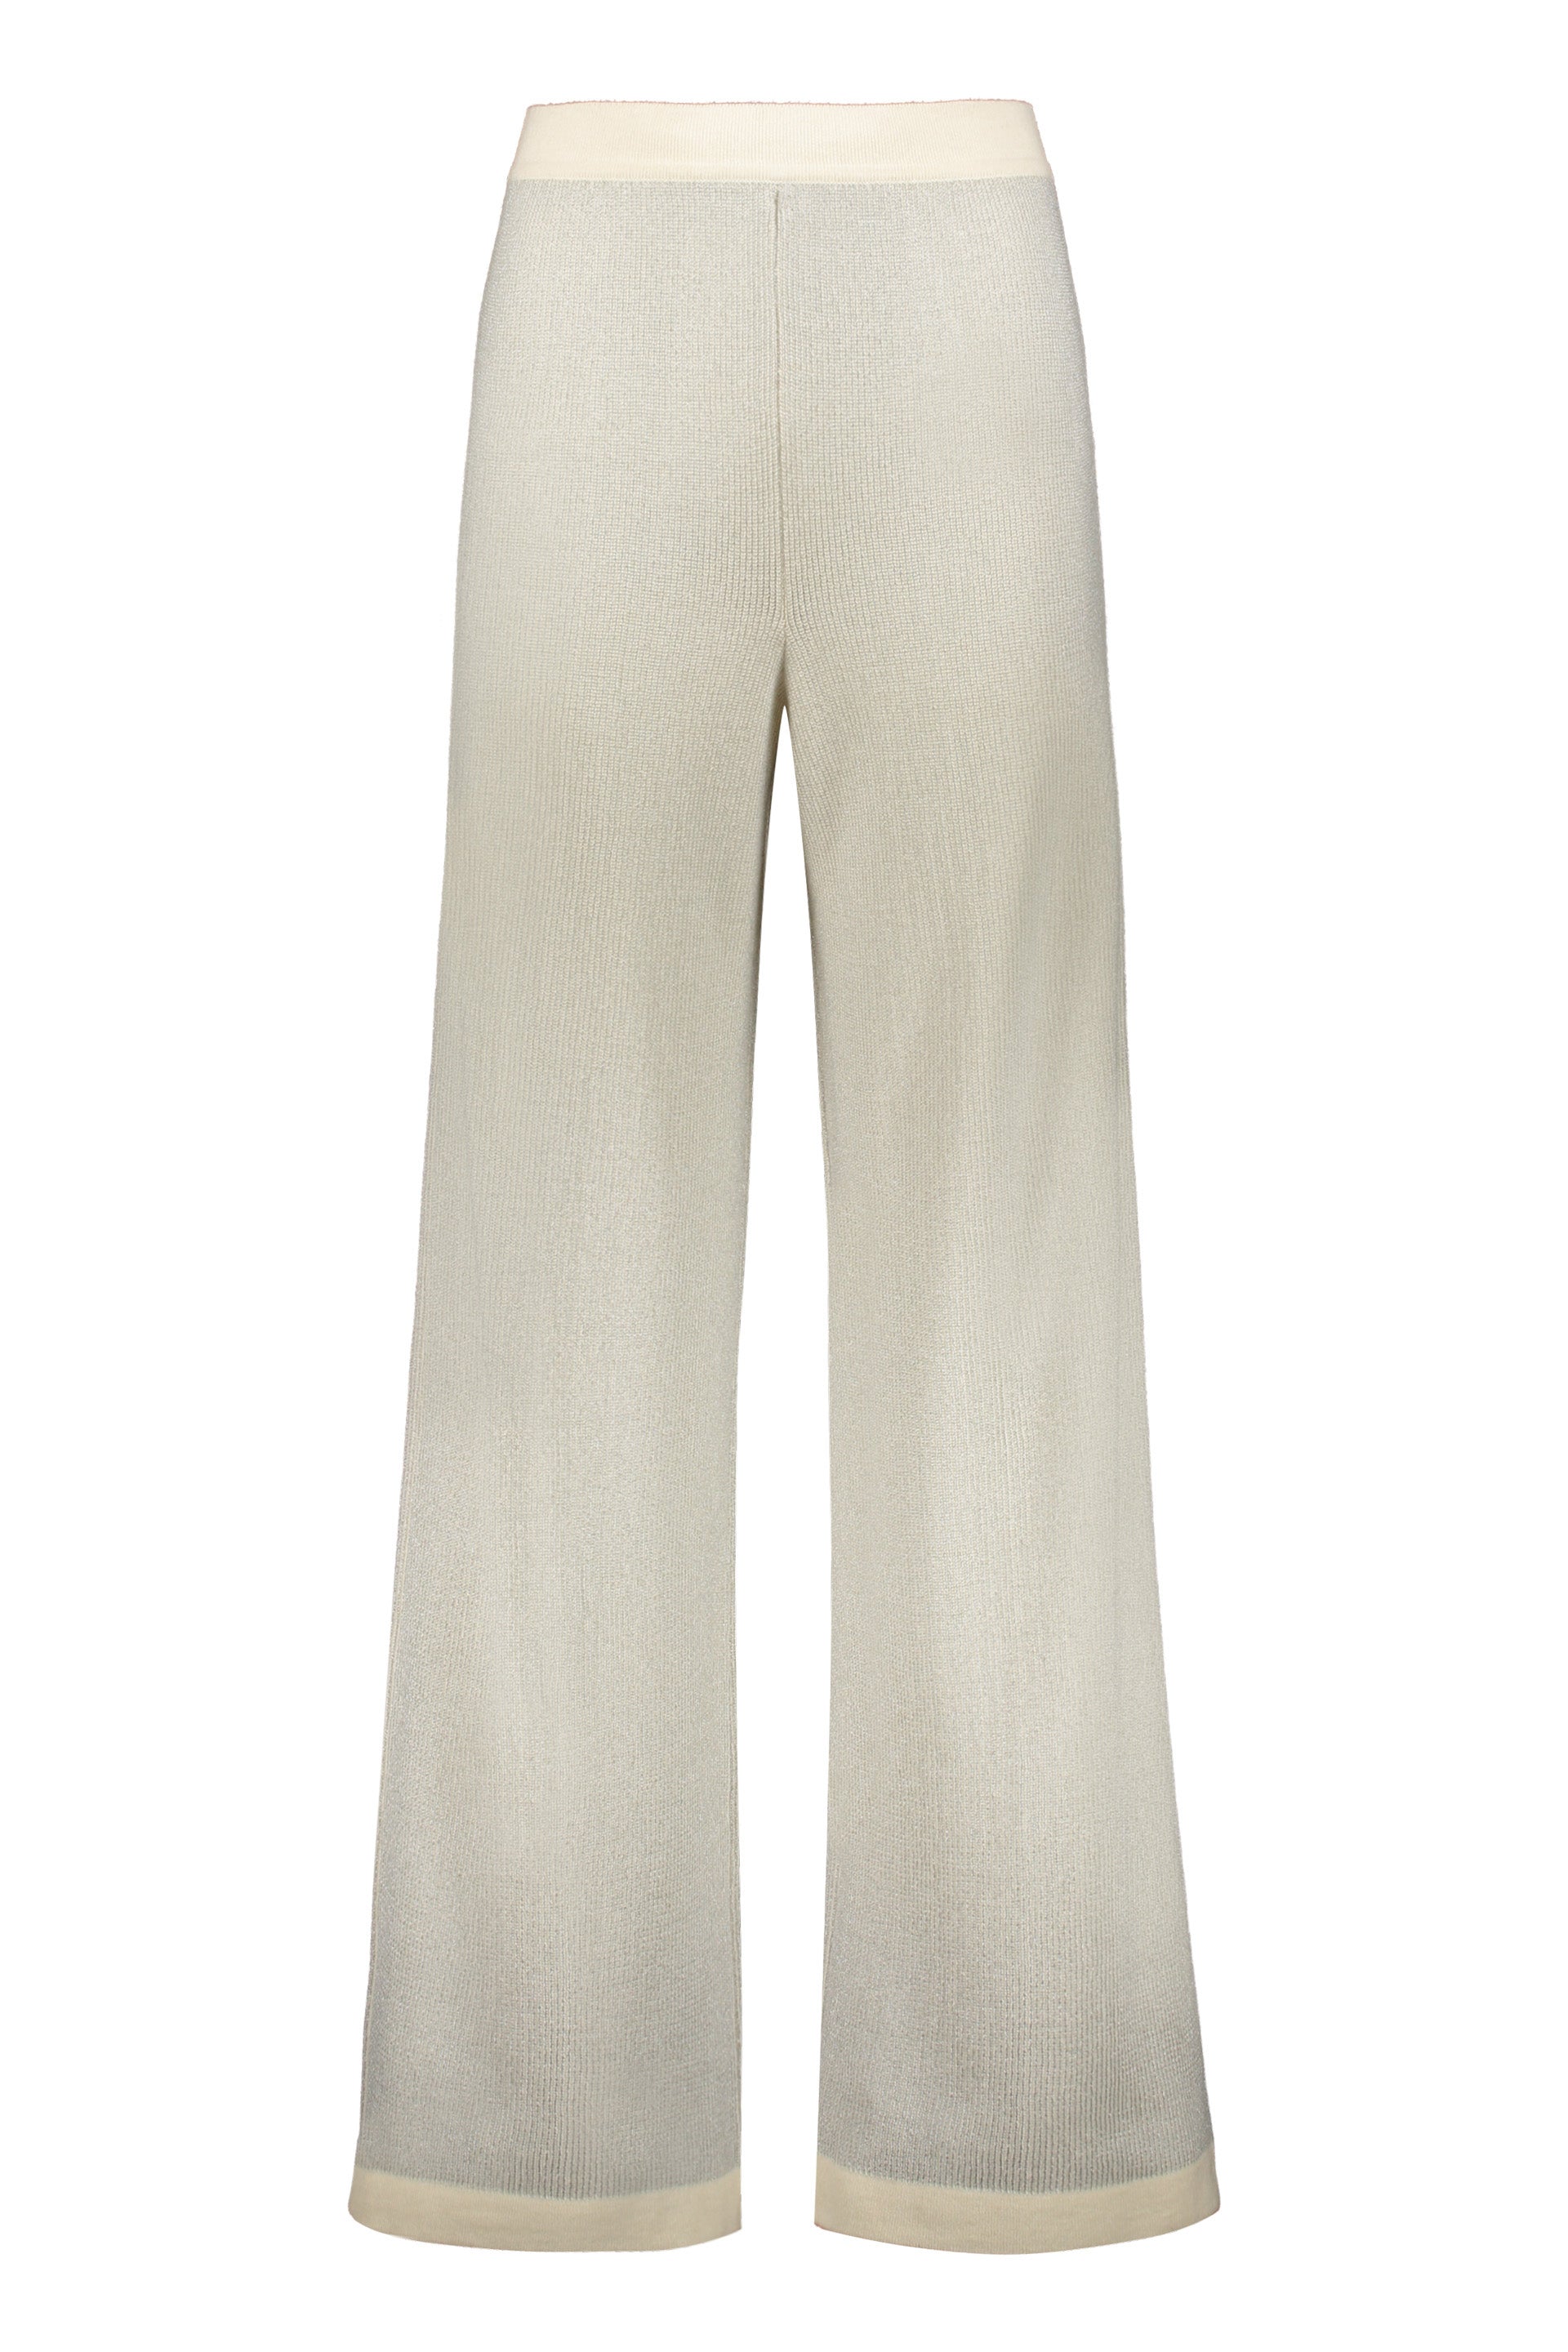 Missoni-OUTLET-SALE-Lurex-knit-trousers-Hosen-42-ARCHIVE-COLLECTION.jpg